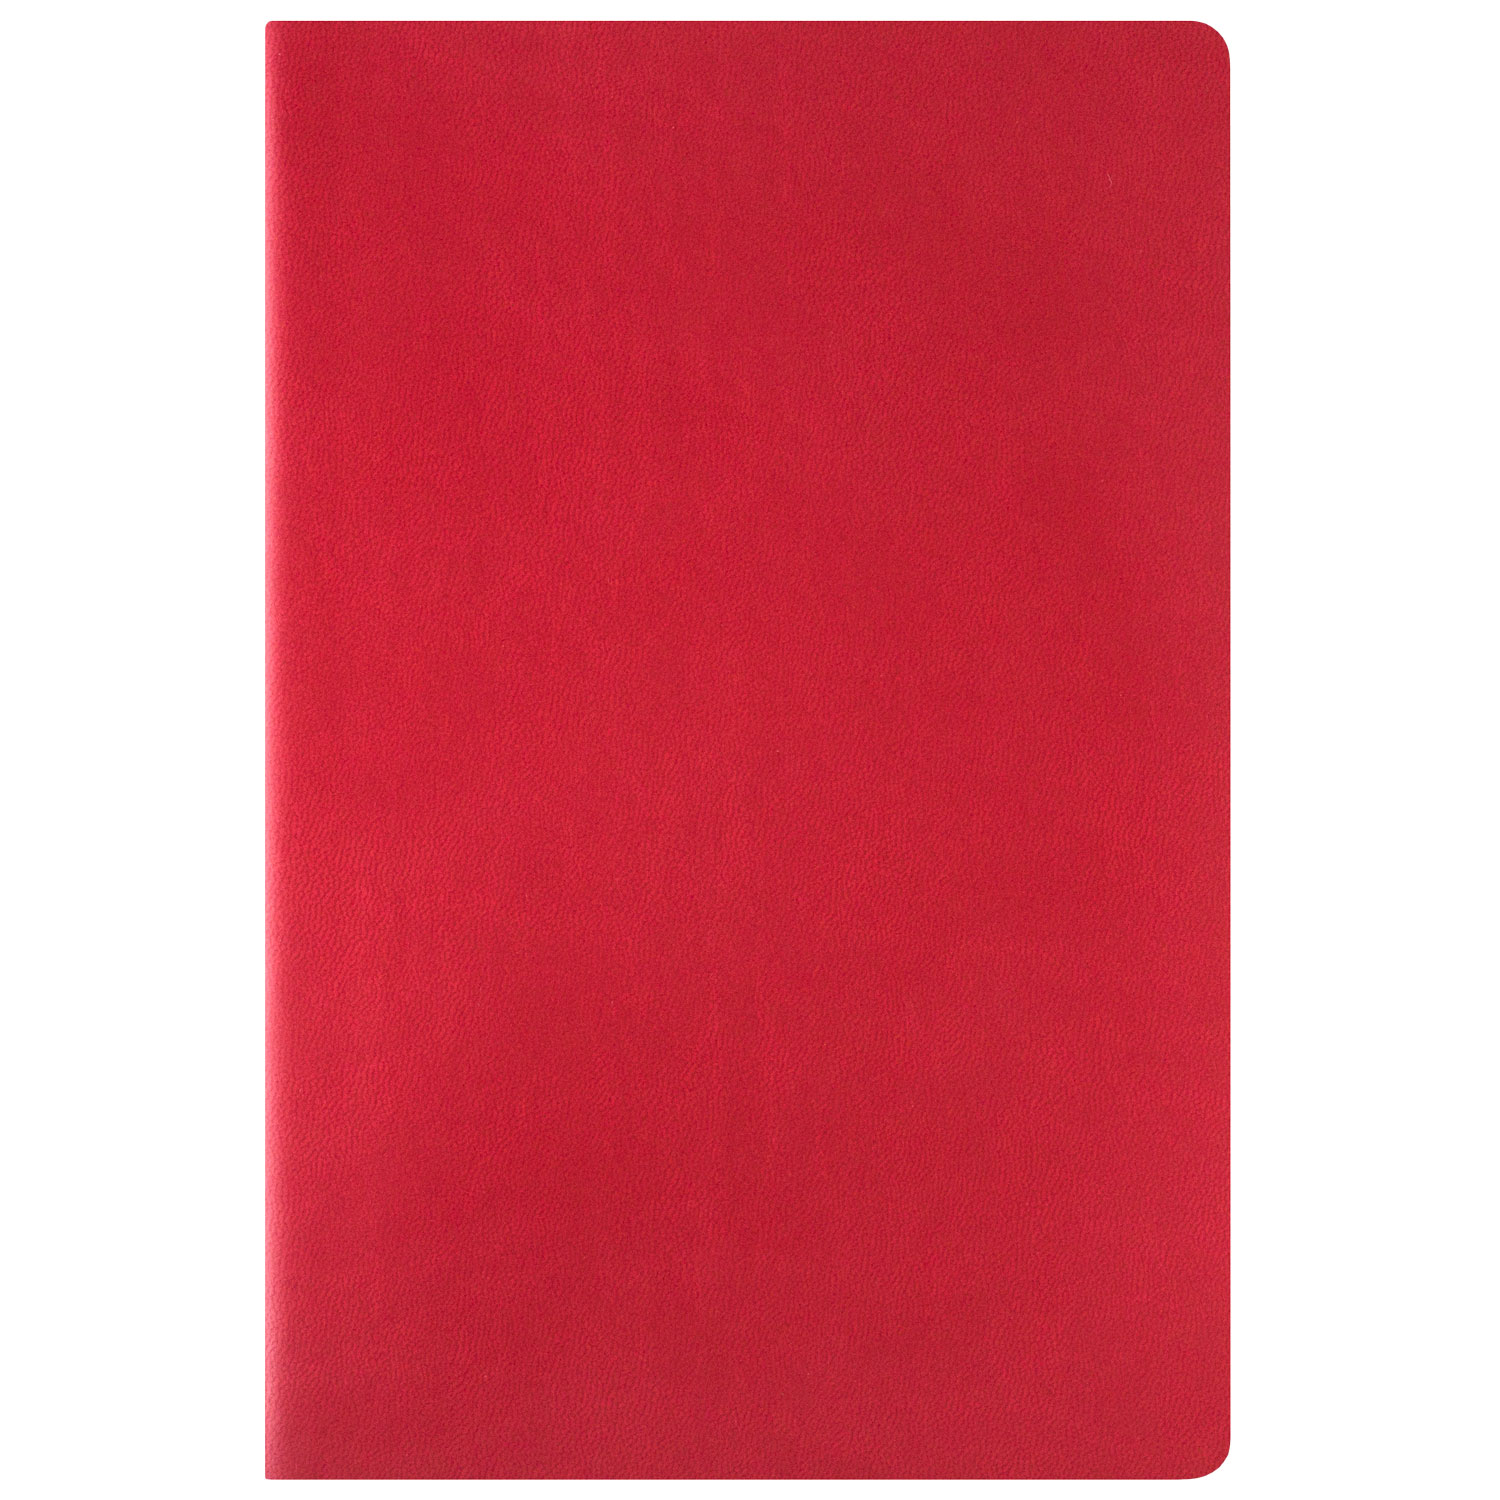  Portobello Notebook Trend, Latte new slim, /